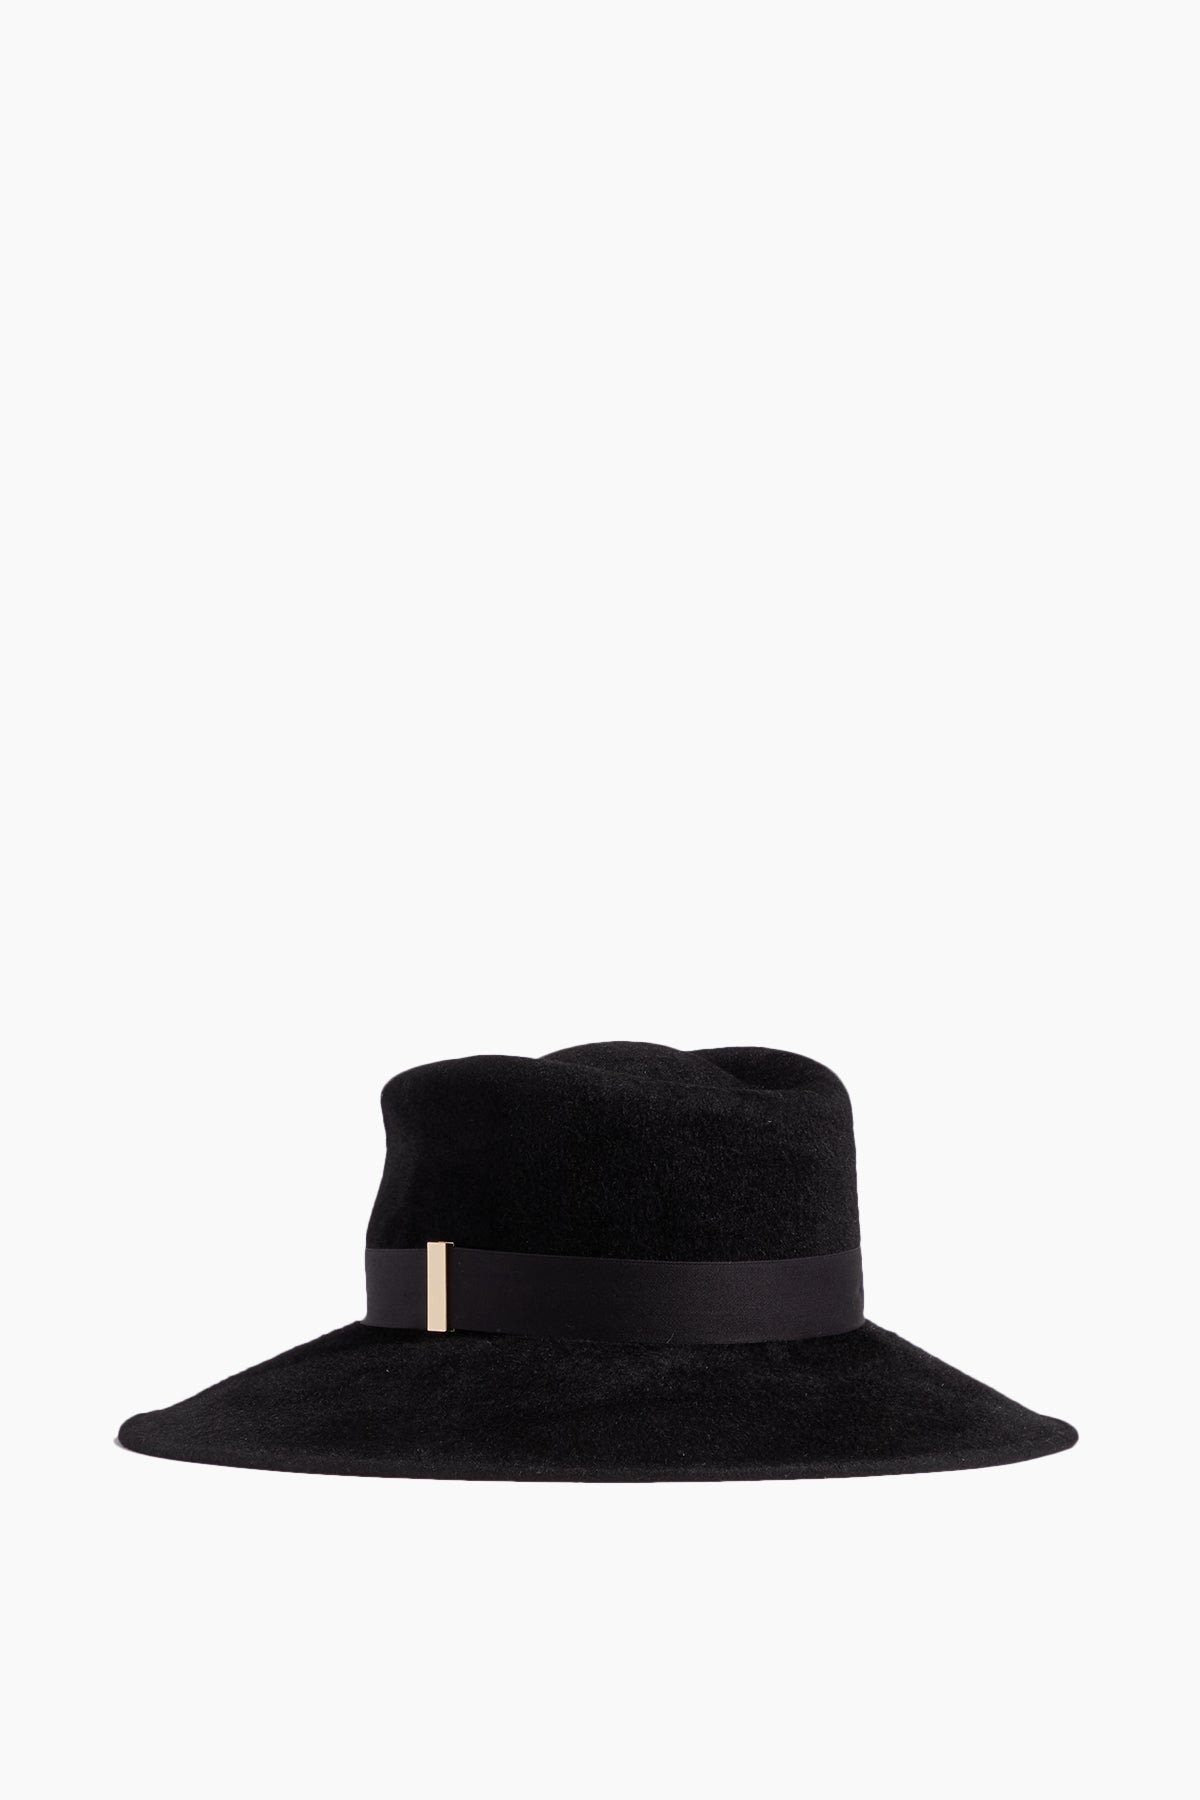 Gigi Burris Hats Merle Hat in Black/Tonal Gigi Burris Merle Hat in Black/Tonal